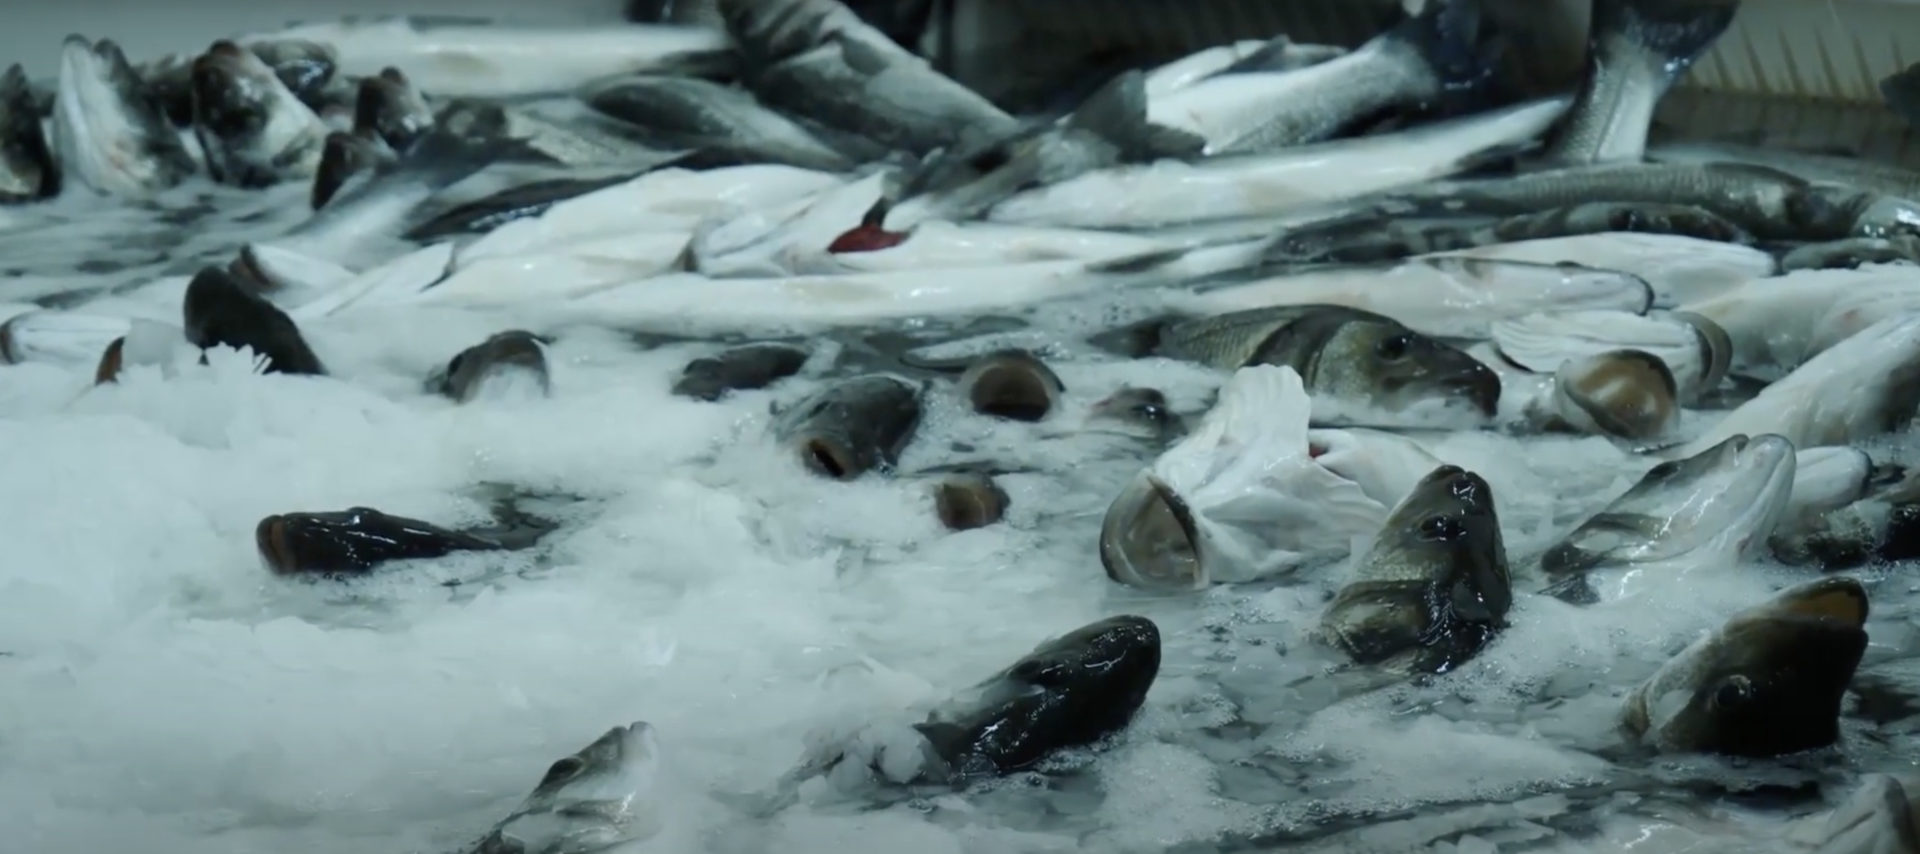 Ocean desolation: how fish farm pollution is killing marine life in Greece 3